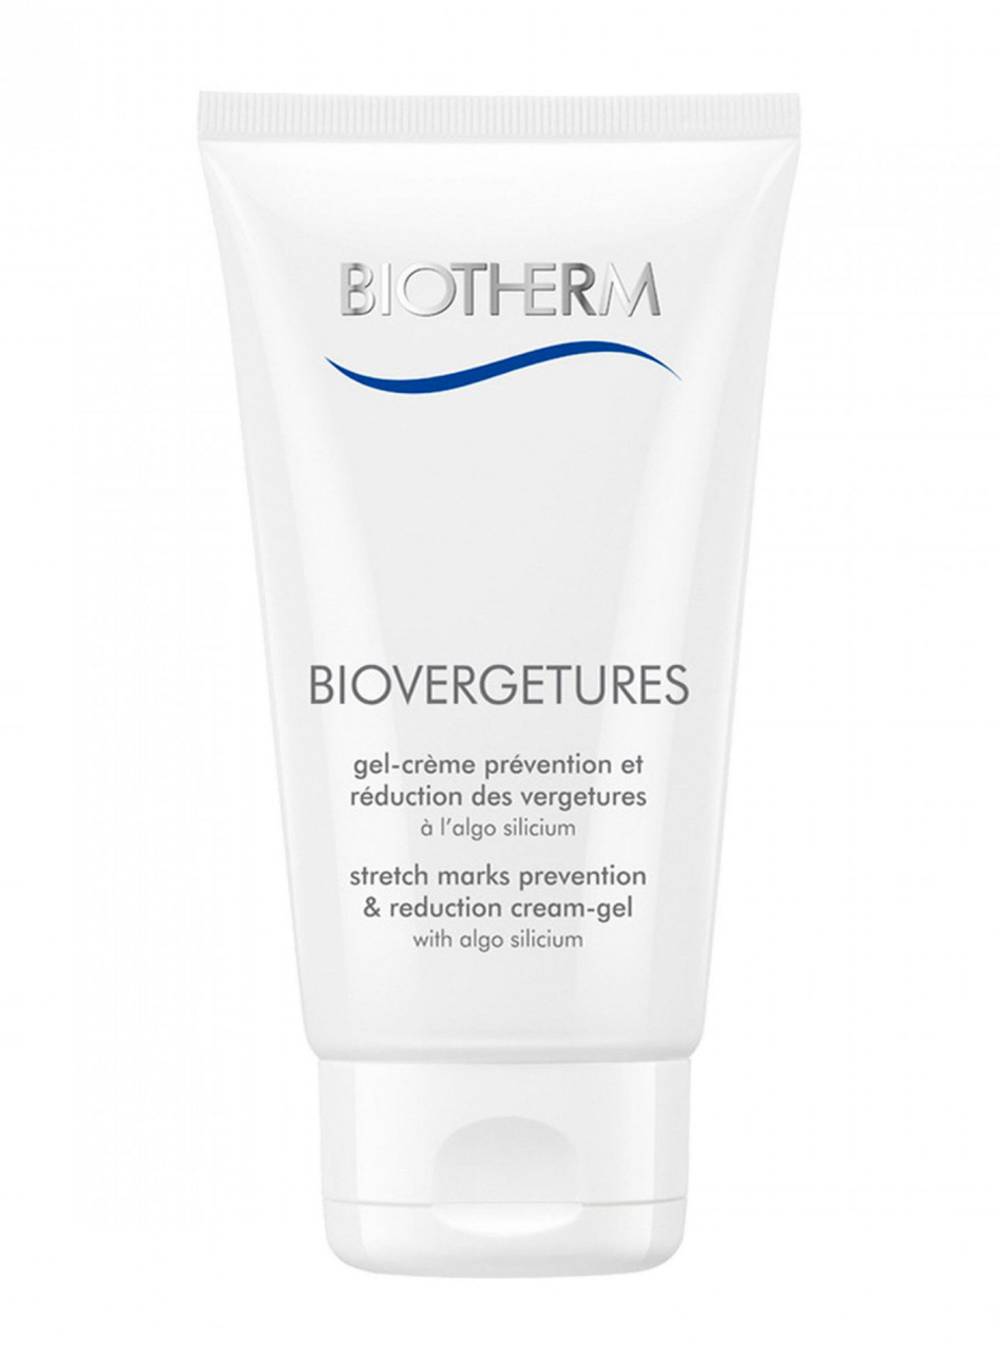 Biotherm biovergetures (150 ml)